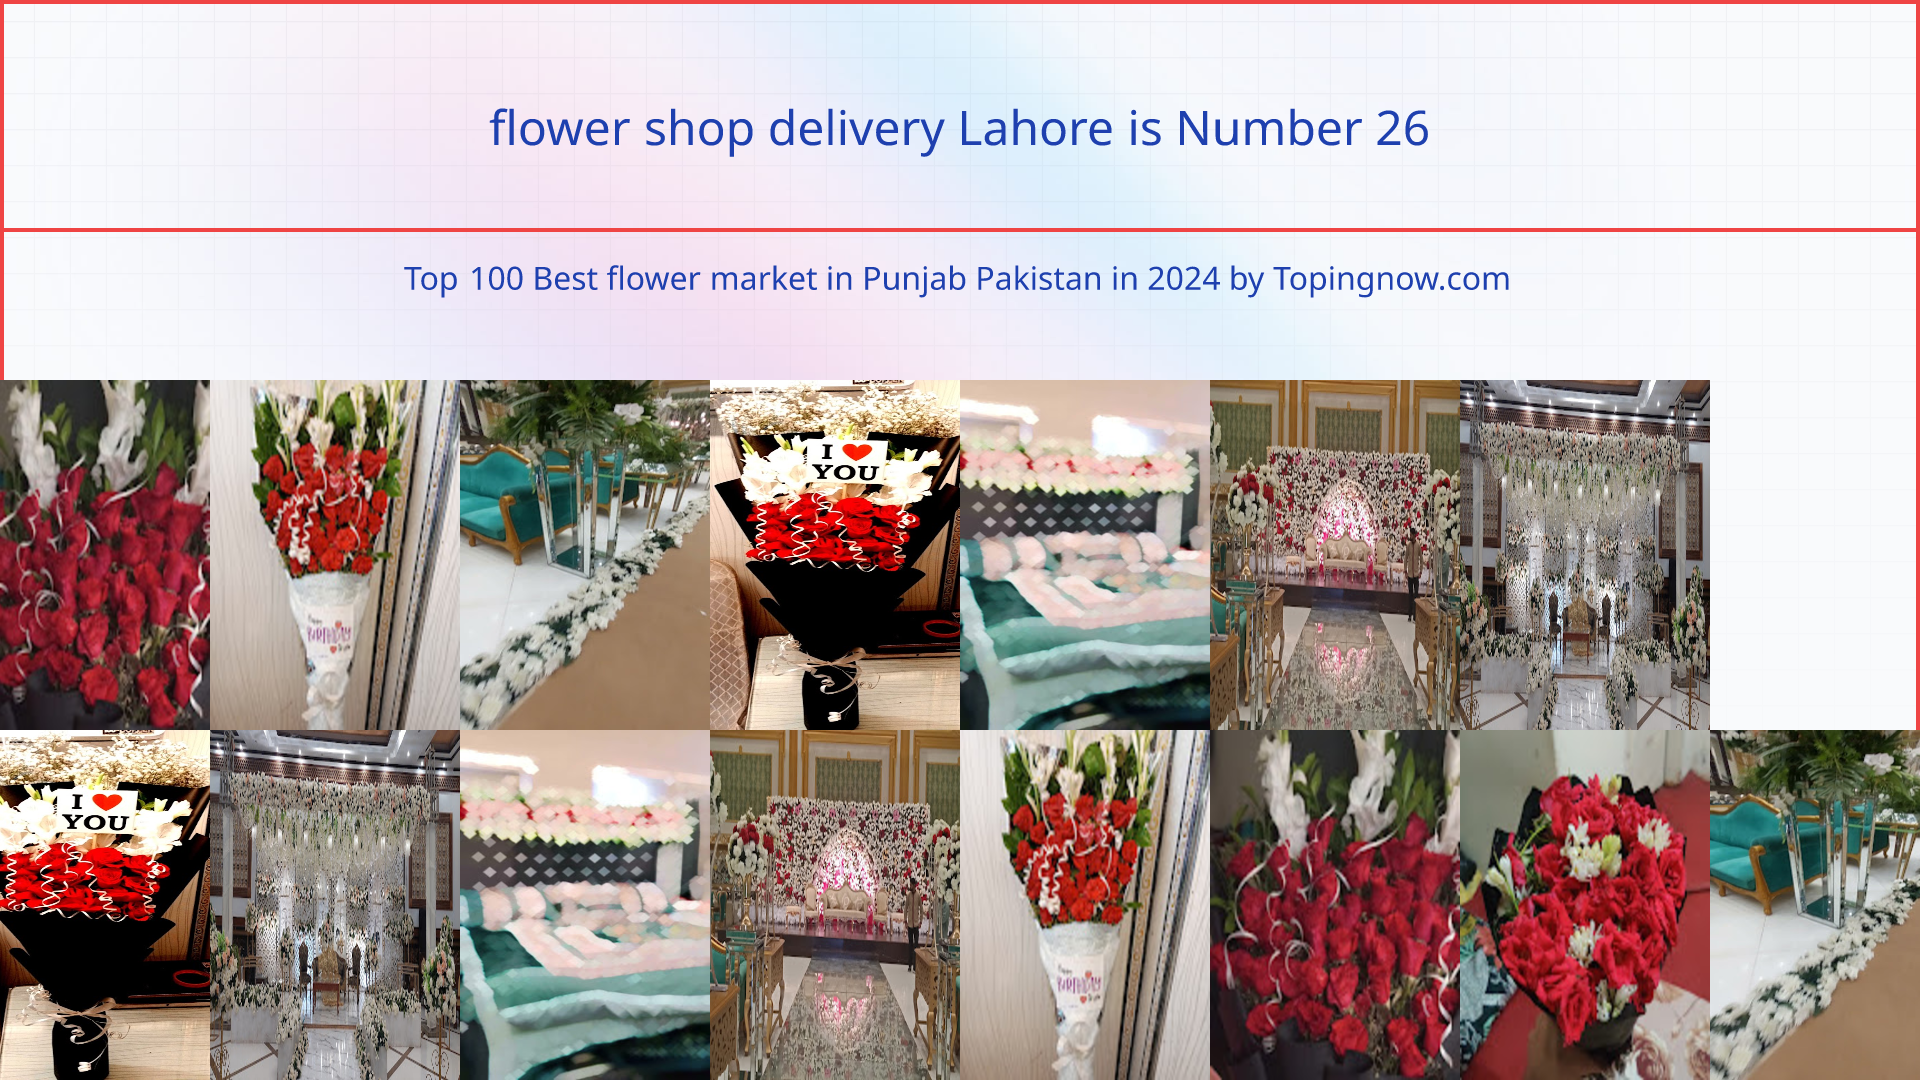 flower shop delivery Lahore: Top 100 Best flower market in Punjab Pakistan in 2024